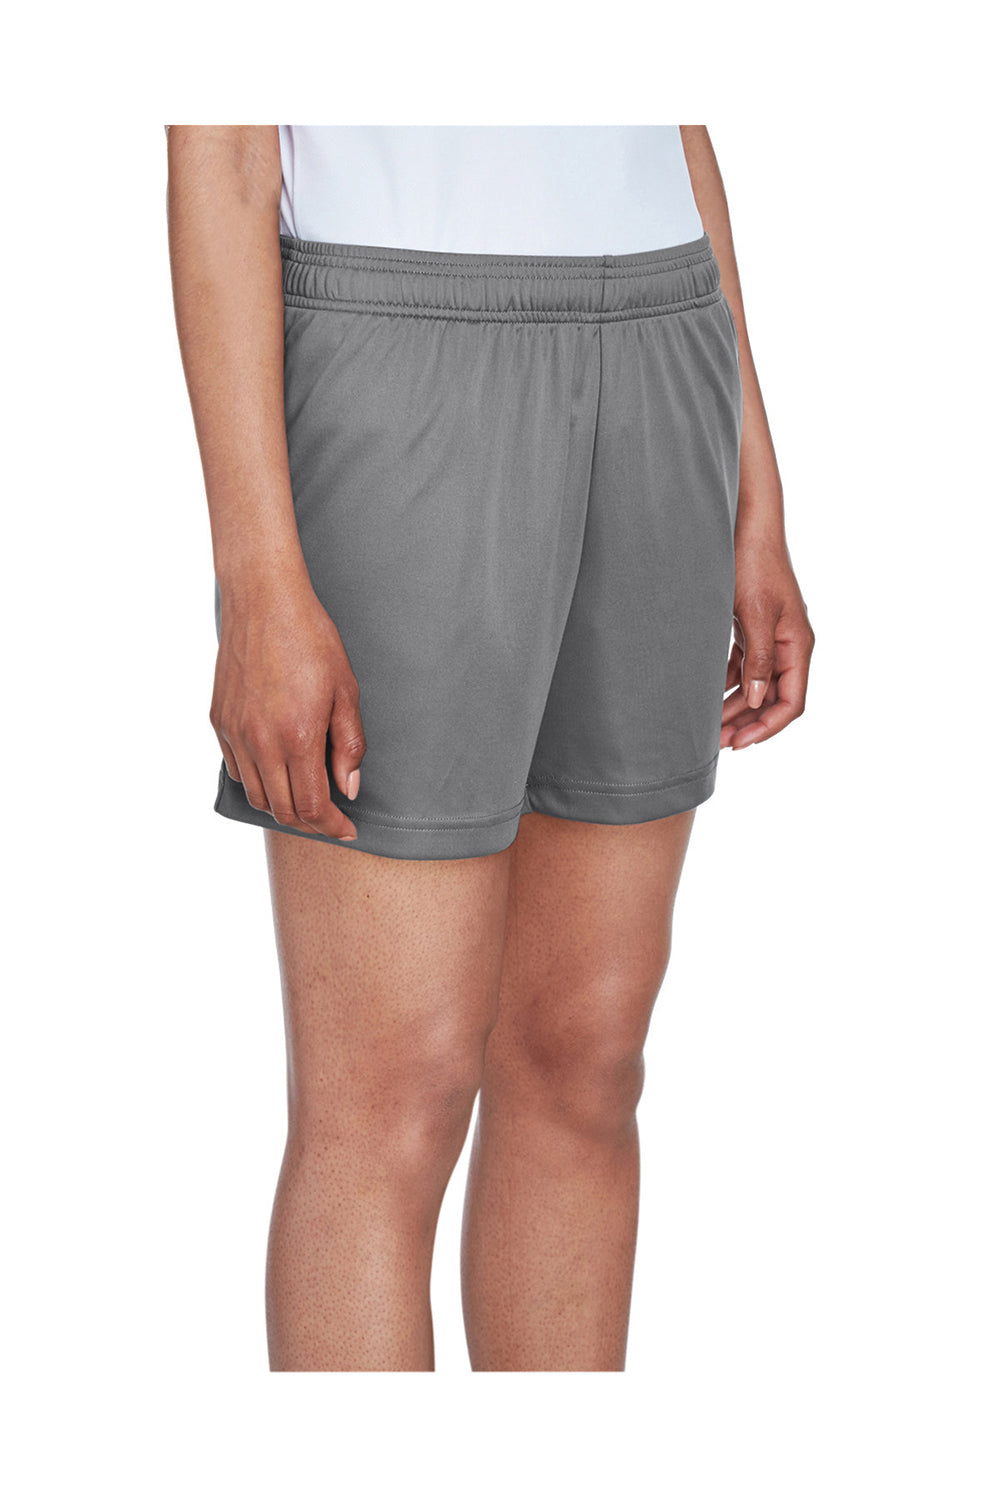 Team 365 TT11SHW Womens Zone Performance Shorts w/ Pockets Graphite Grey 3Q